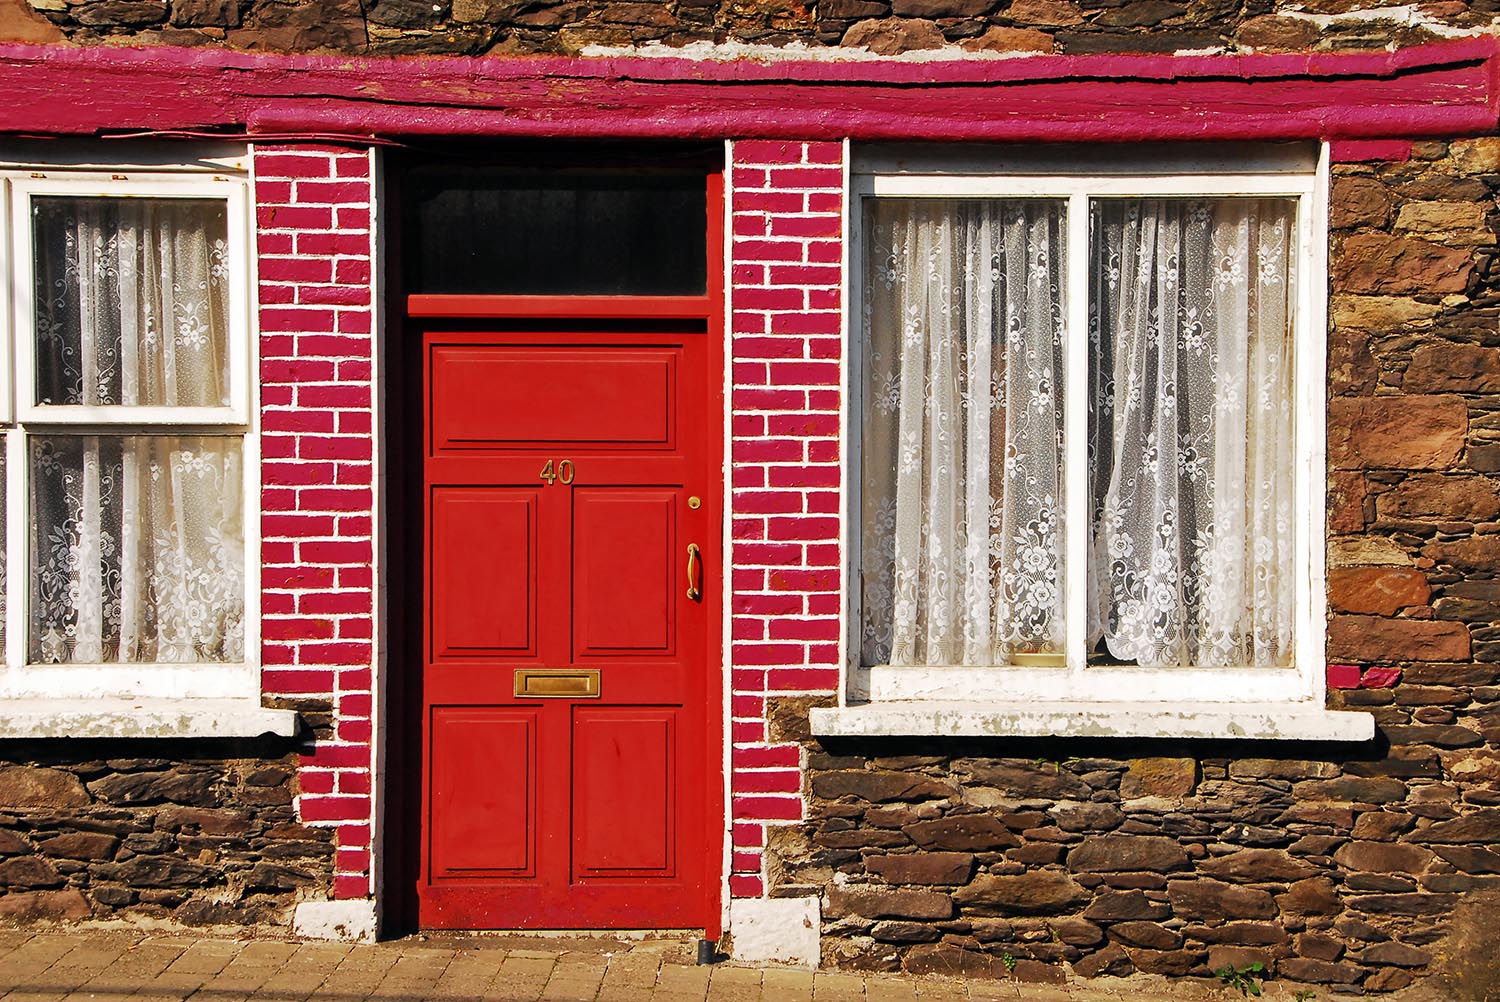 Door_Red_Window_Lace_Curtains_Stone_Wall_Exterior_Castlegregory_Ireland.jpg